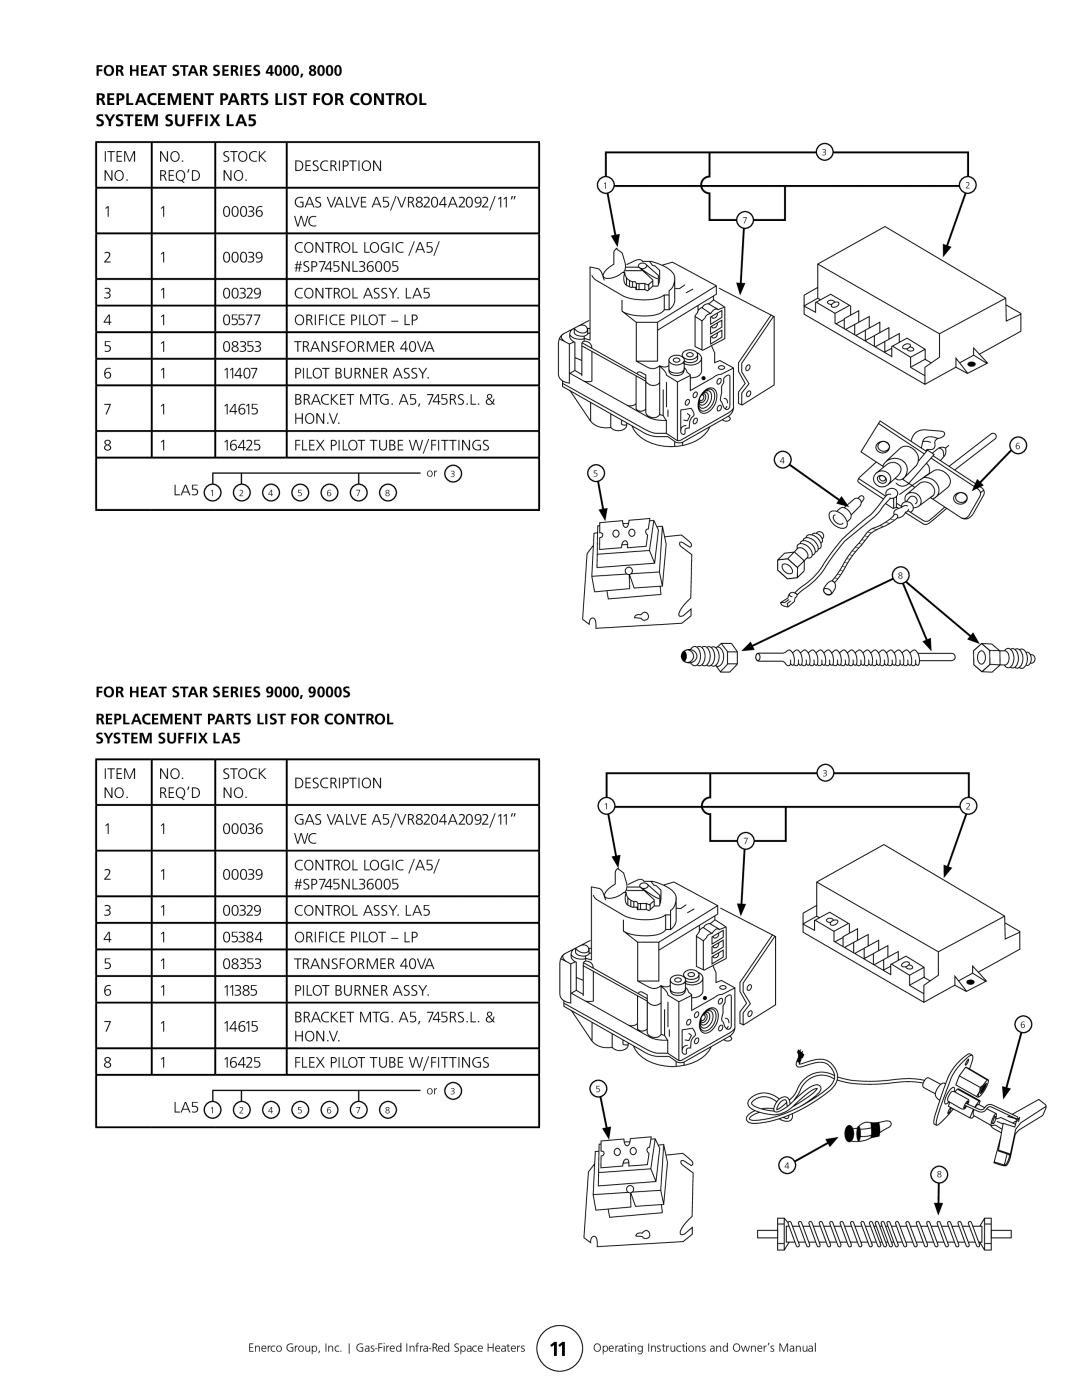 Enerco HS9120, HS4040, HS8060, HS9100S Replacement Parts List For Control, SYSTEM SUFFIX LA5, For Heat Star Series 